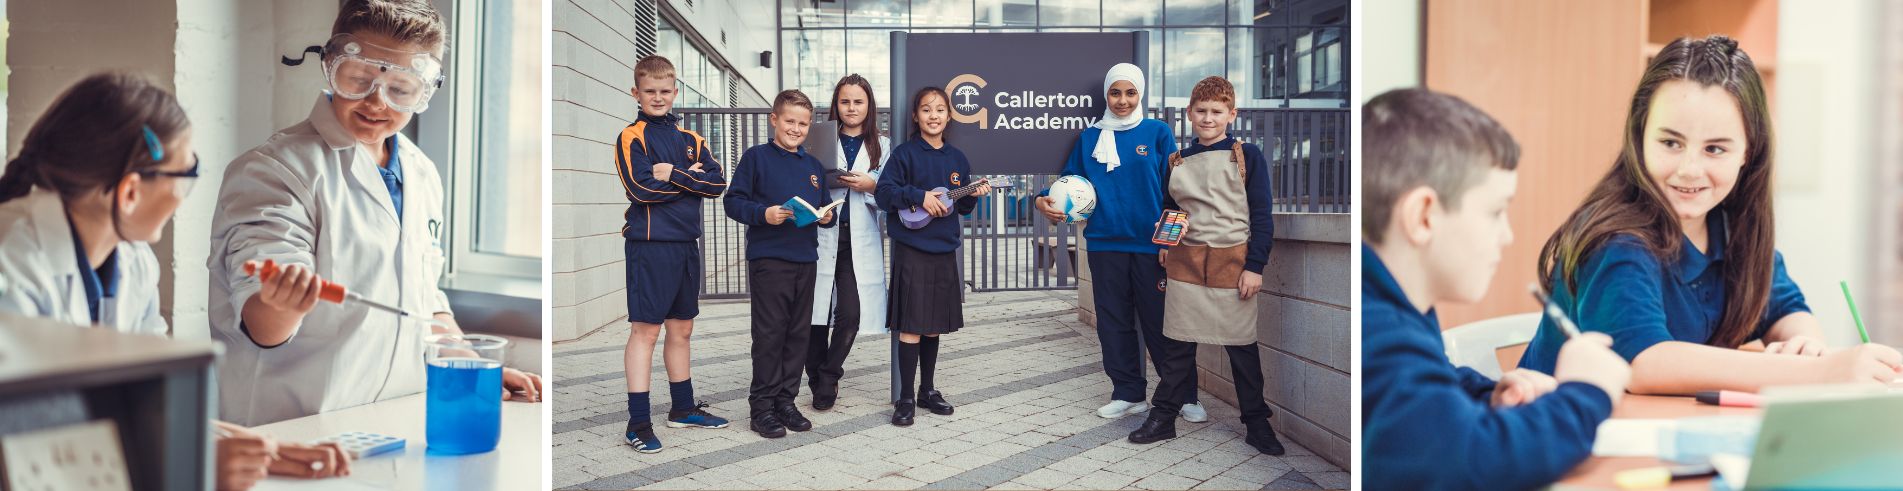 Callerton Academy Open Day Events